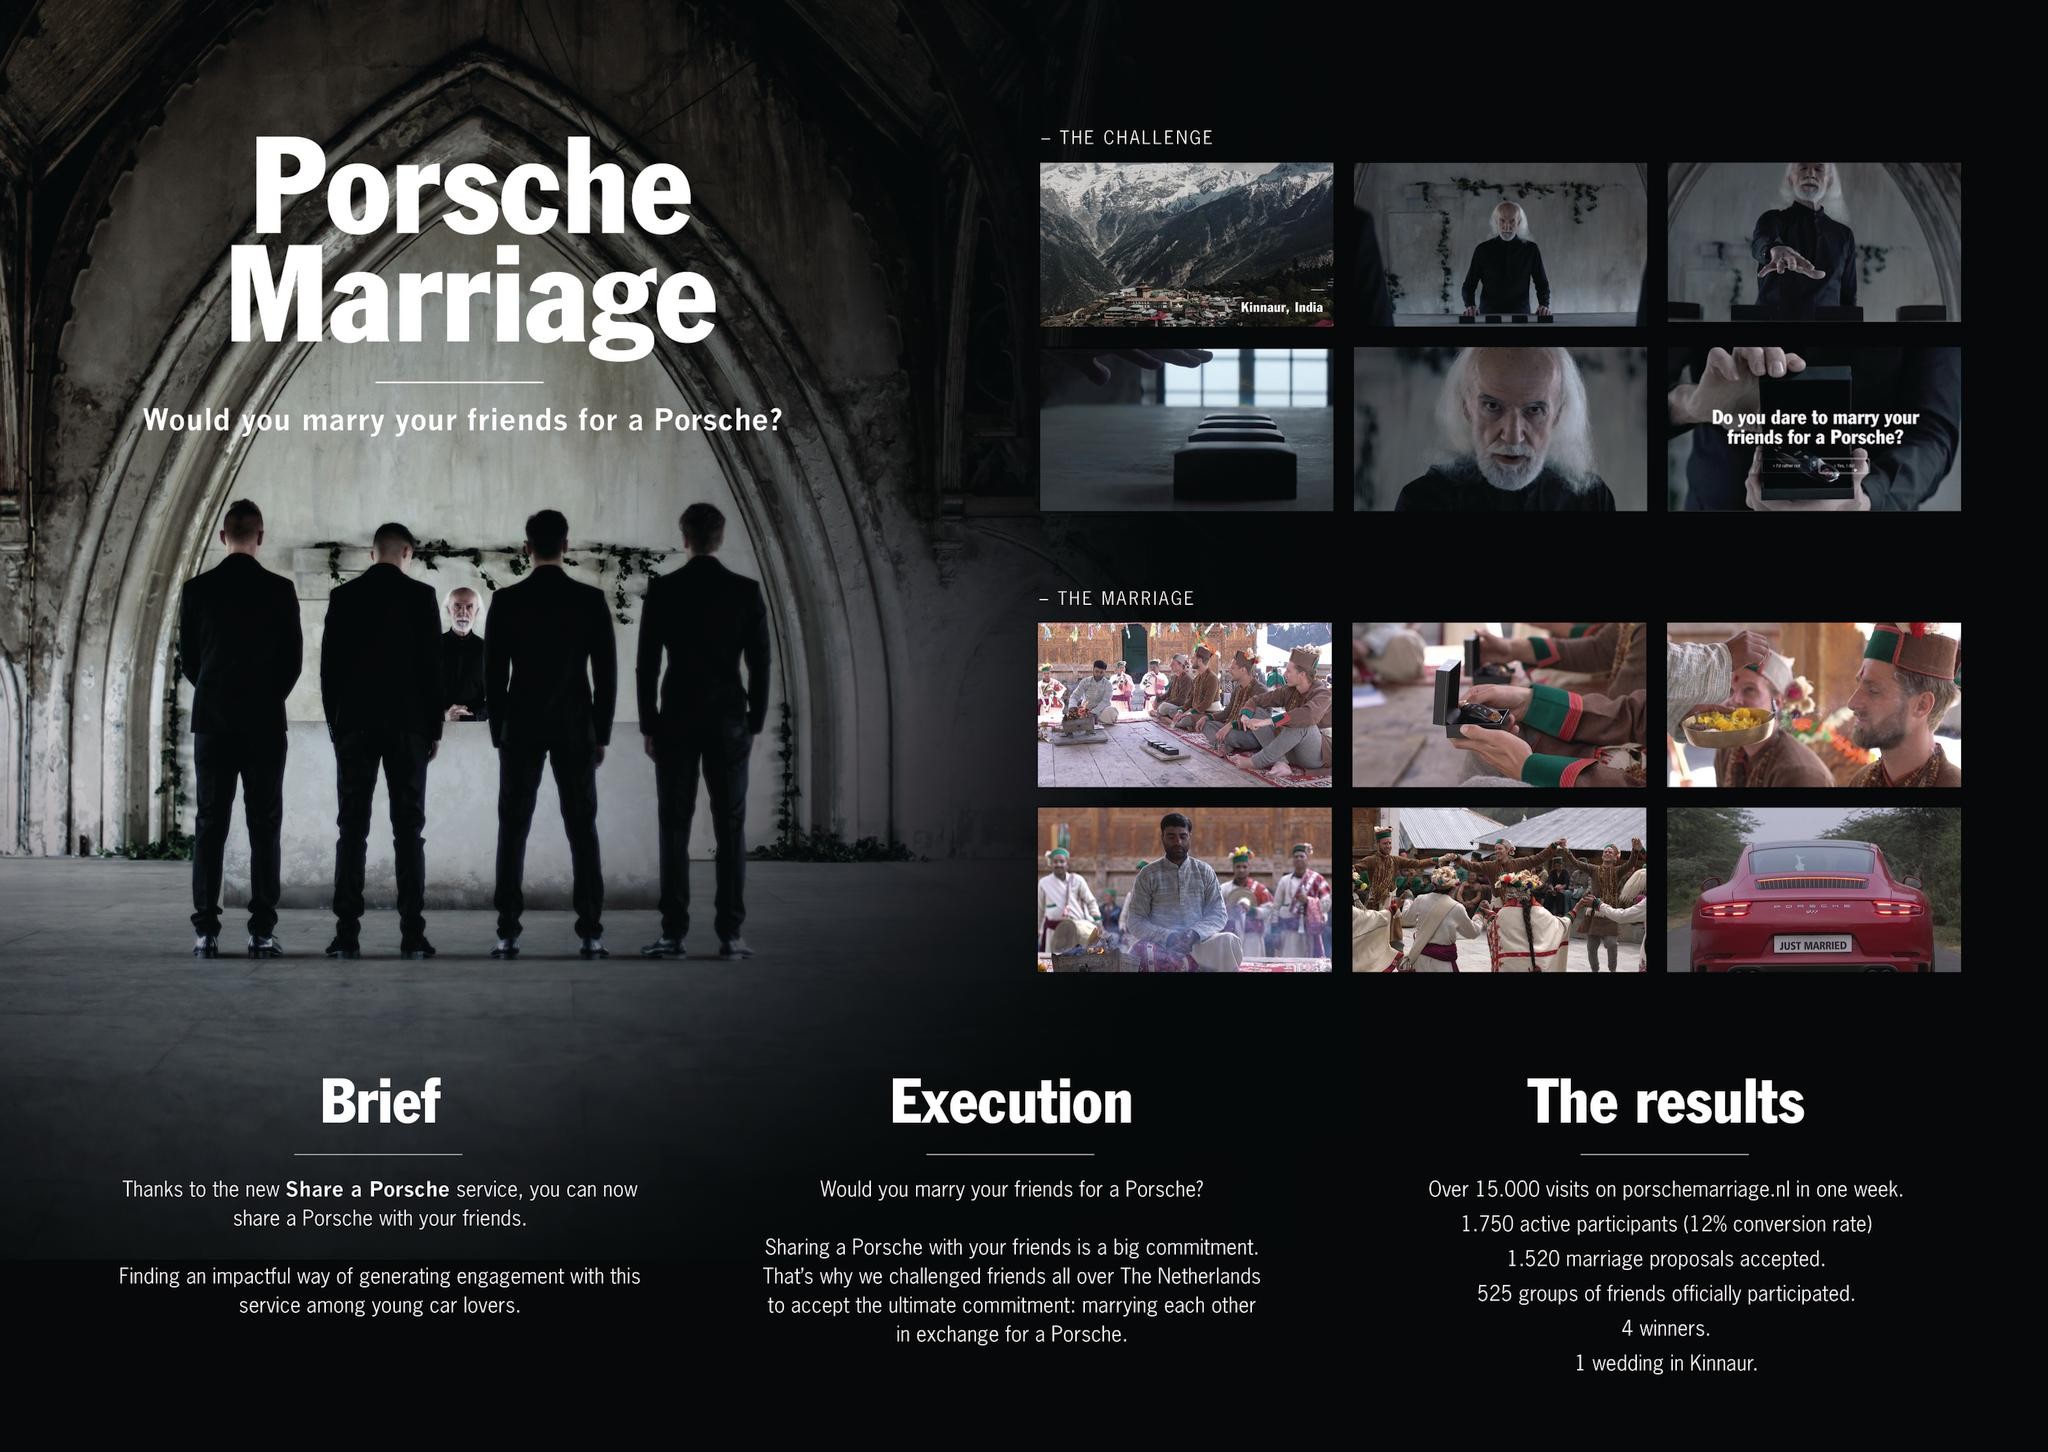 Porsche Marriage